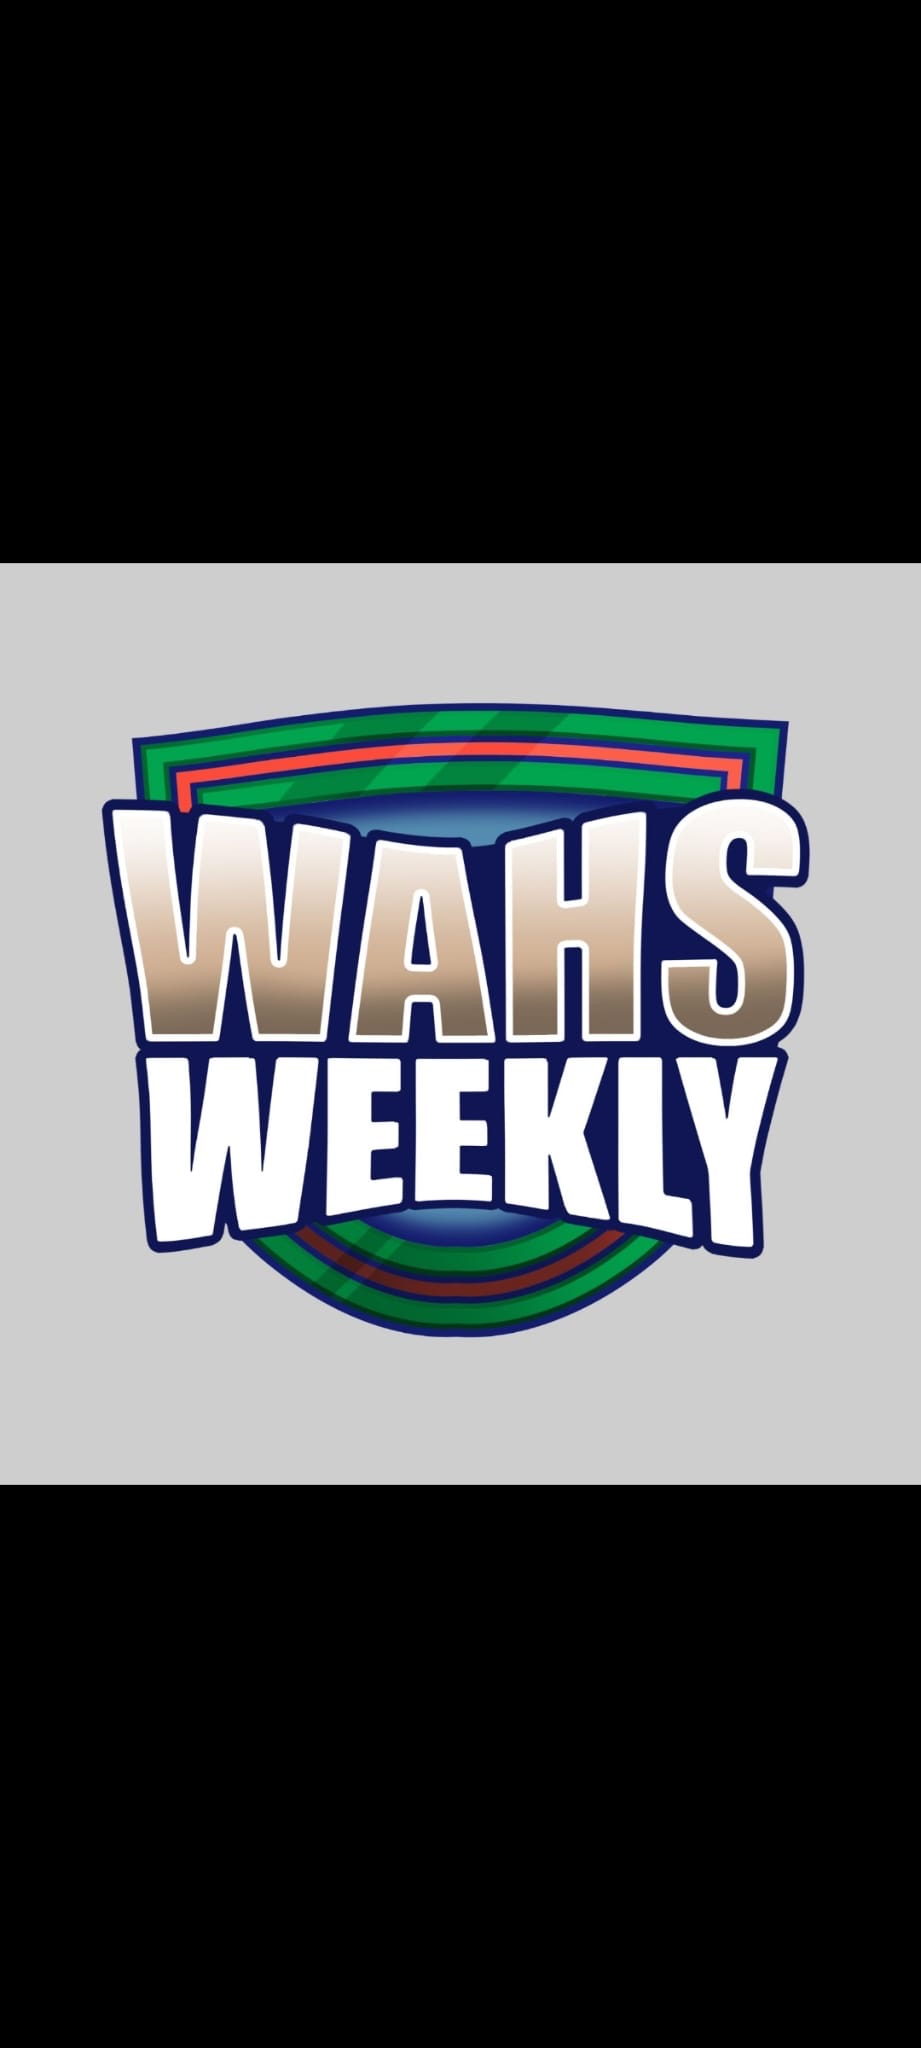 Wahs Weekly - Episode 11 (Talking League)